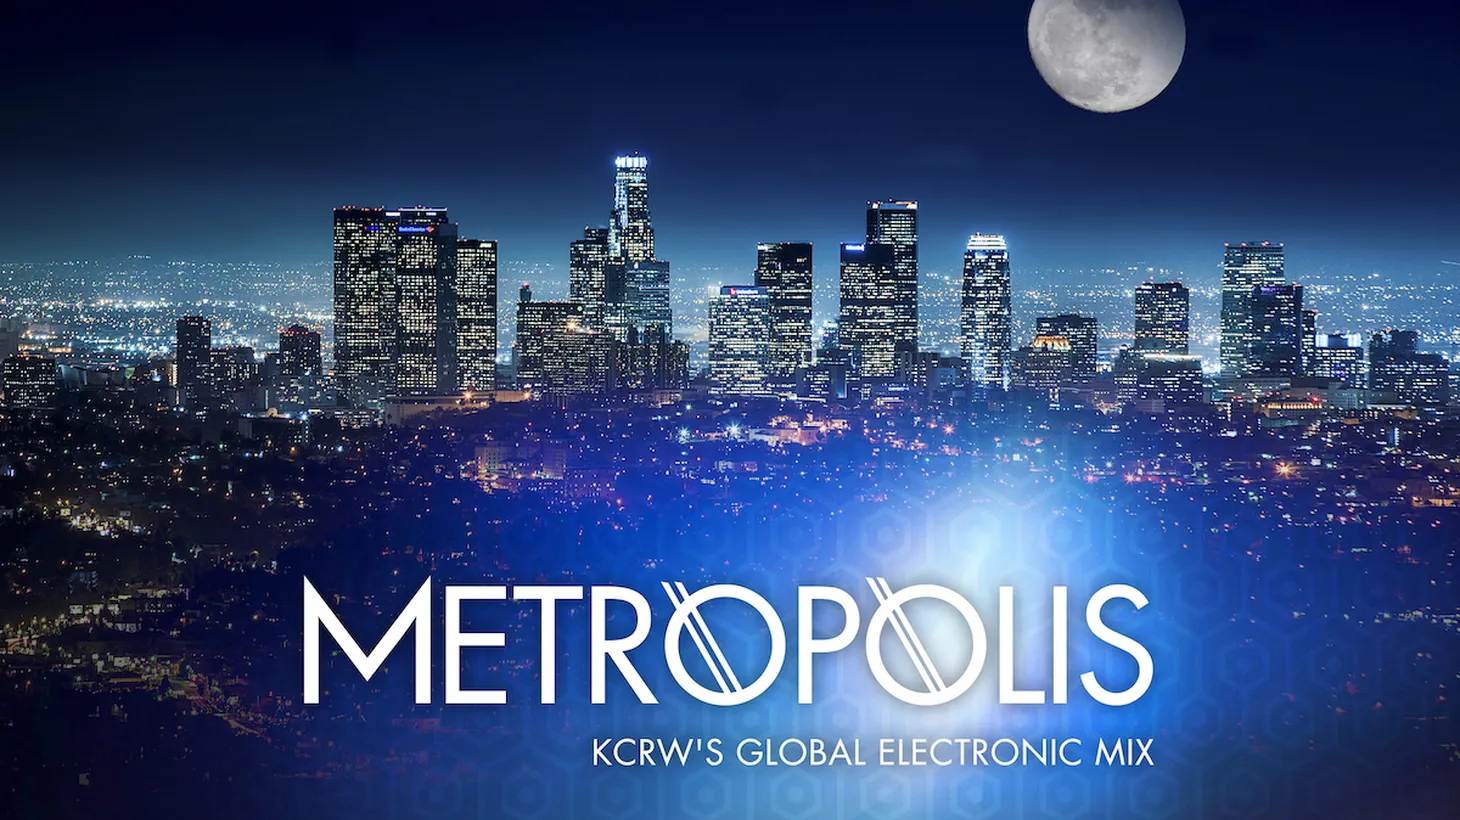 Metropolis playlist, October 30, 2021.